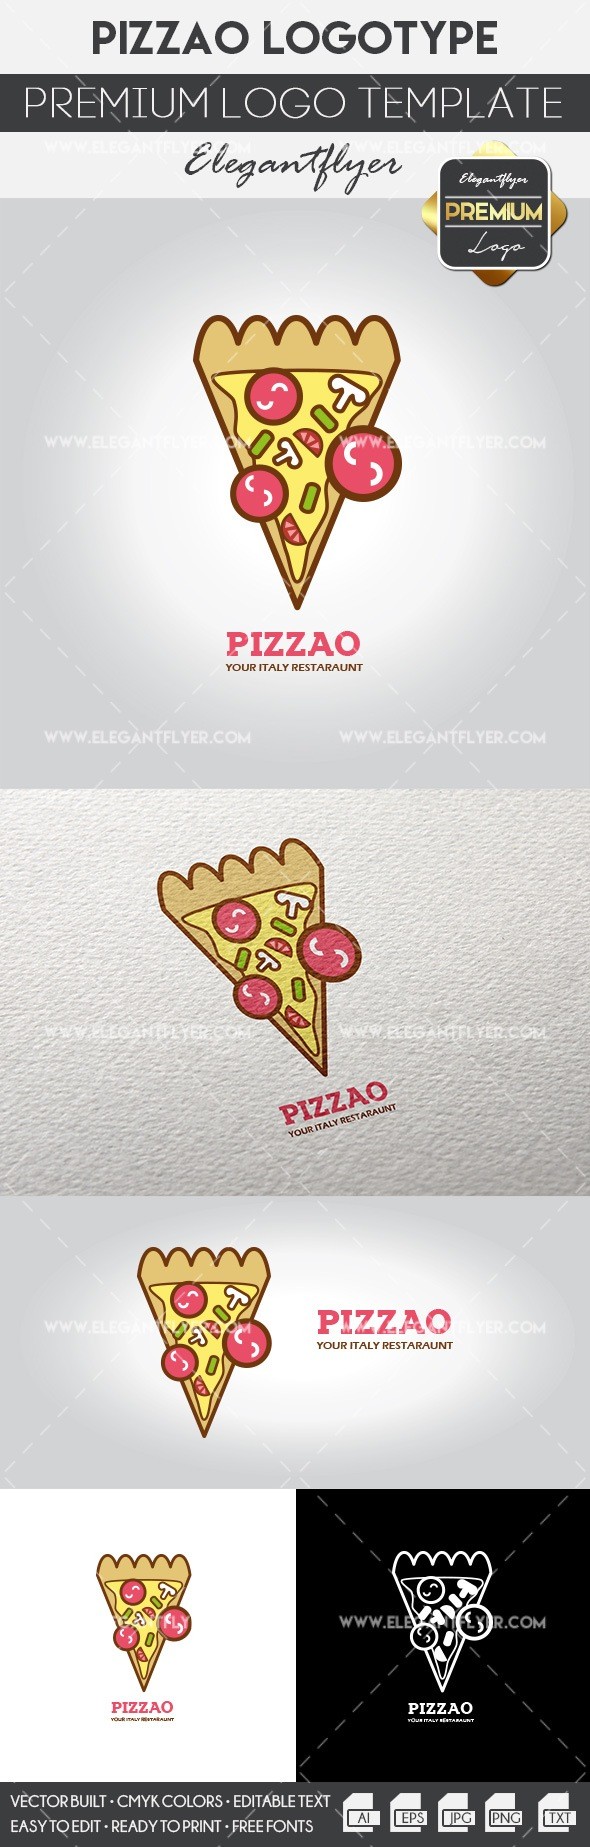 Pizza by ElegantFlyer